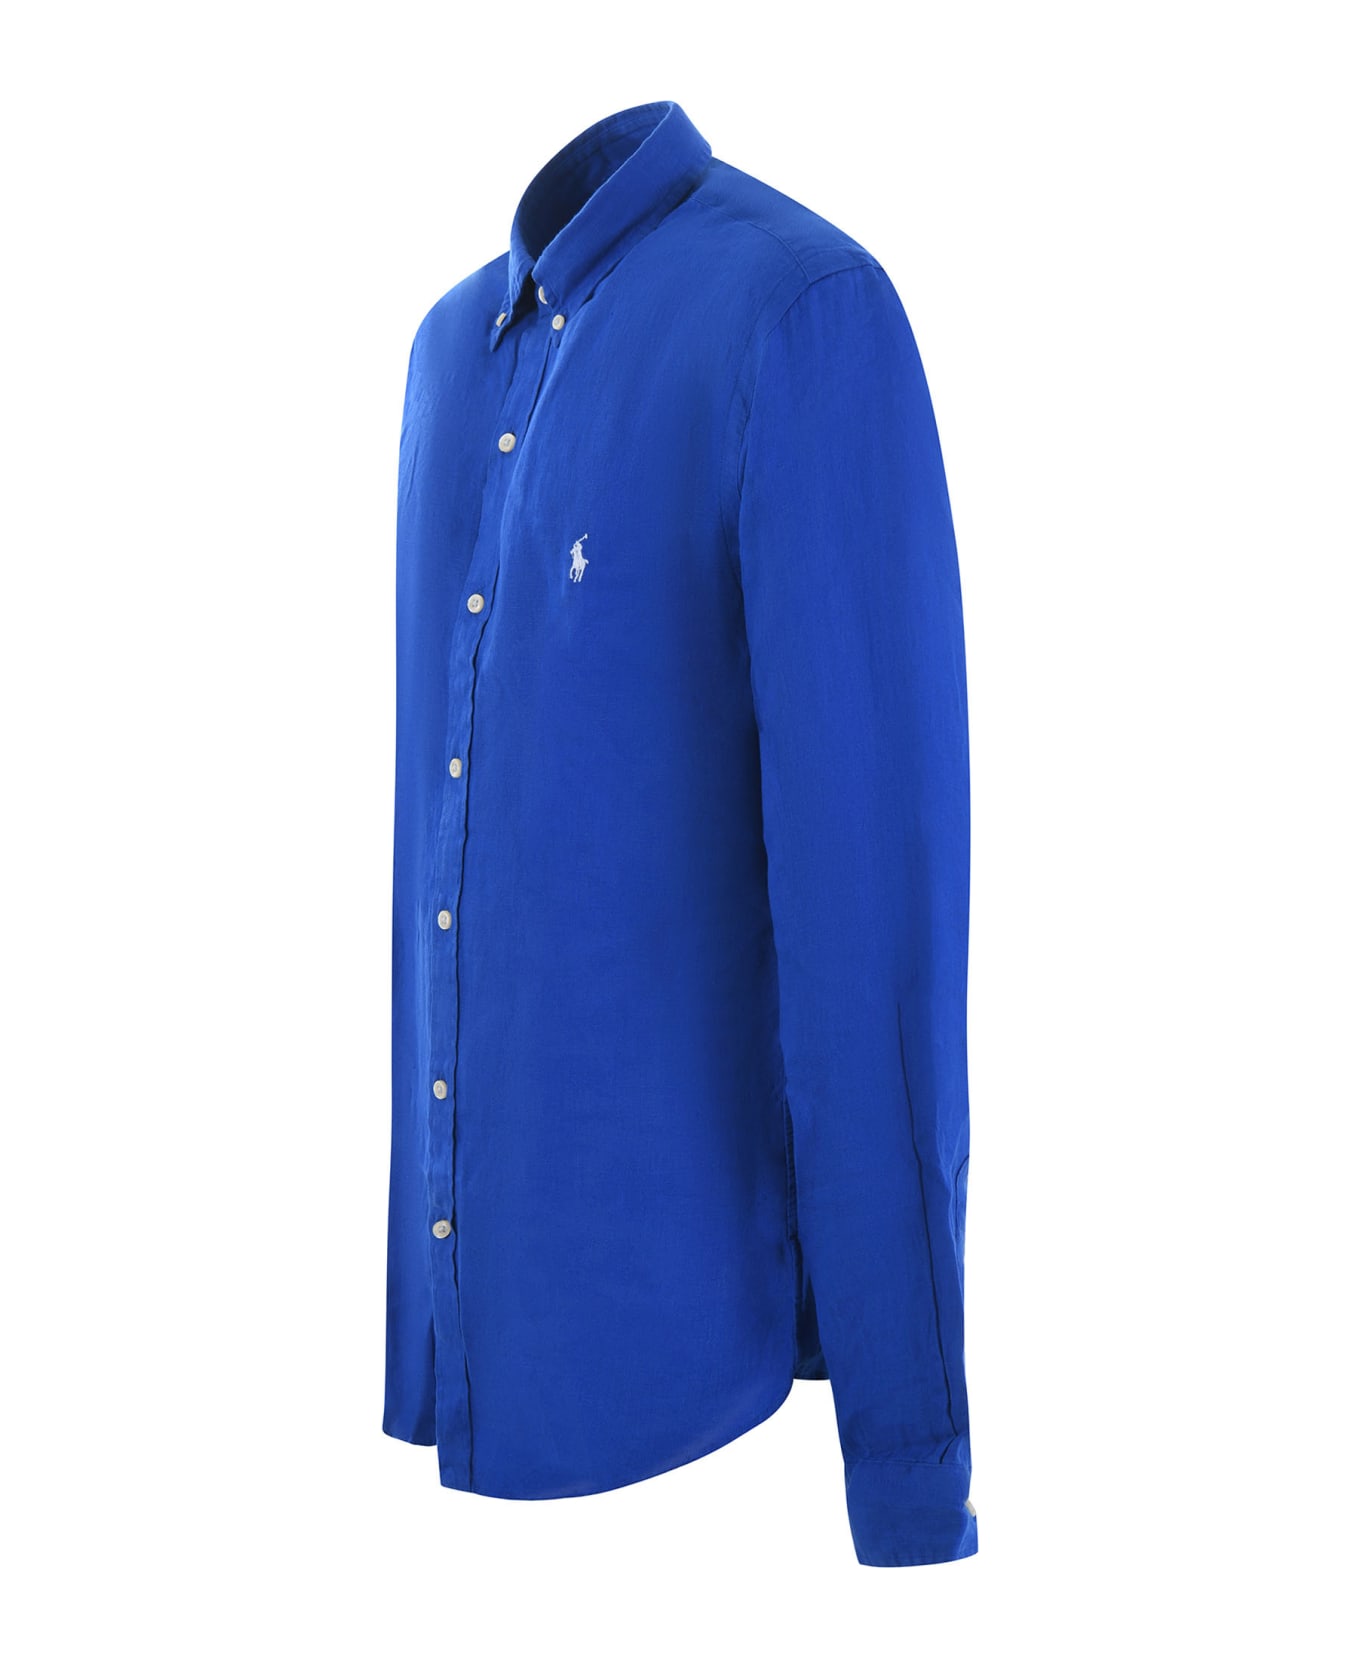 Polo Ralph Lauren Shirt - Blu elettrico シャツ